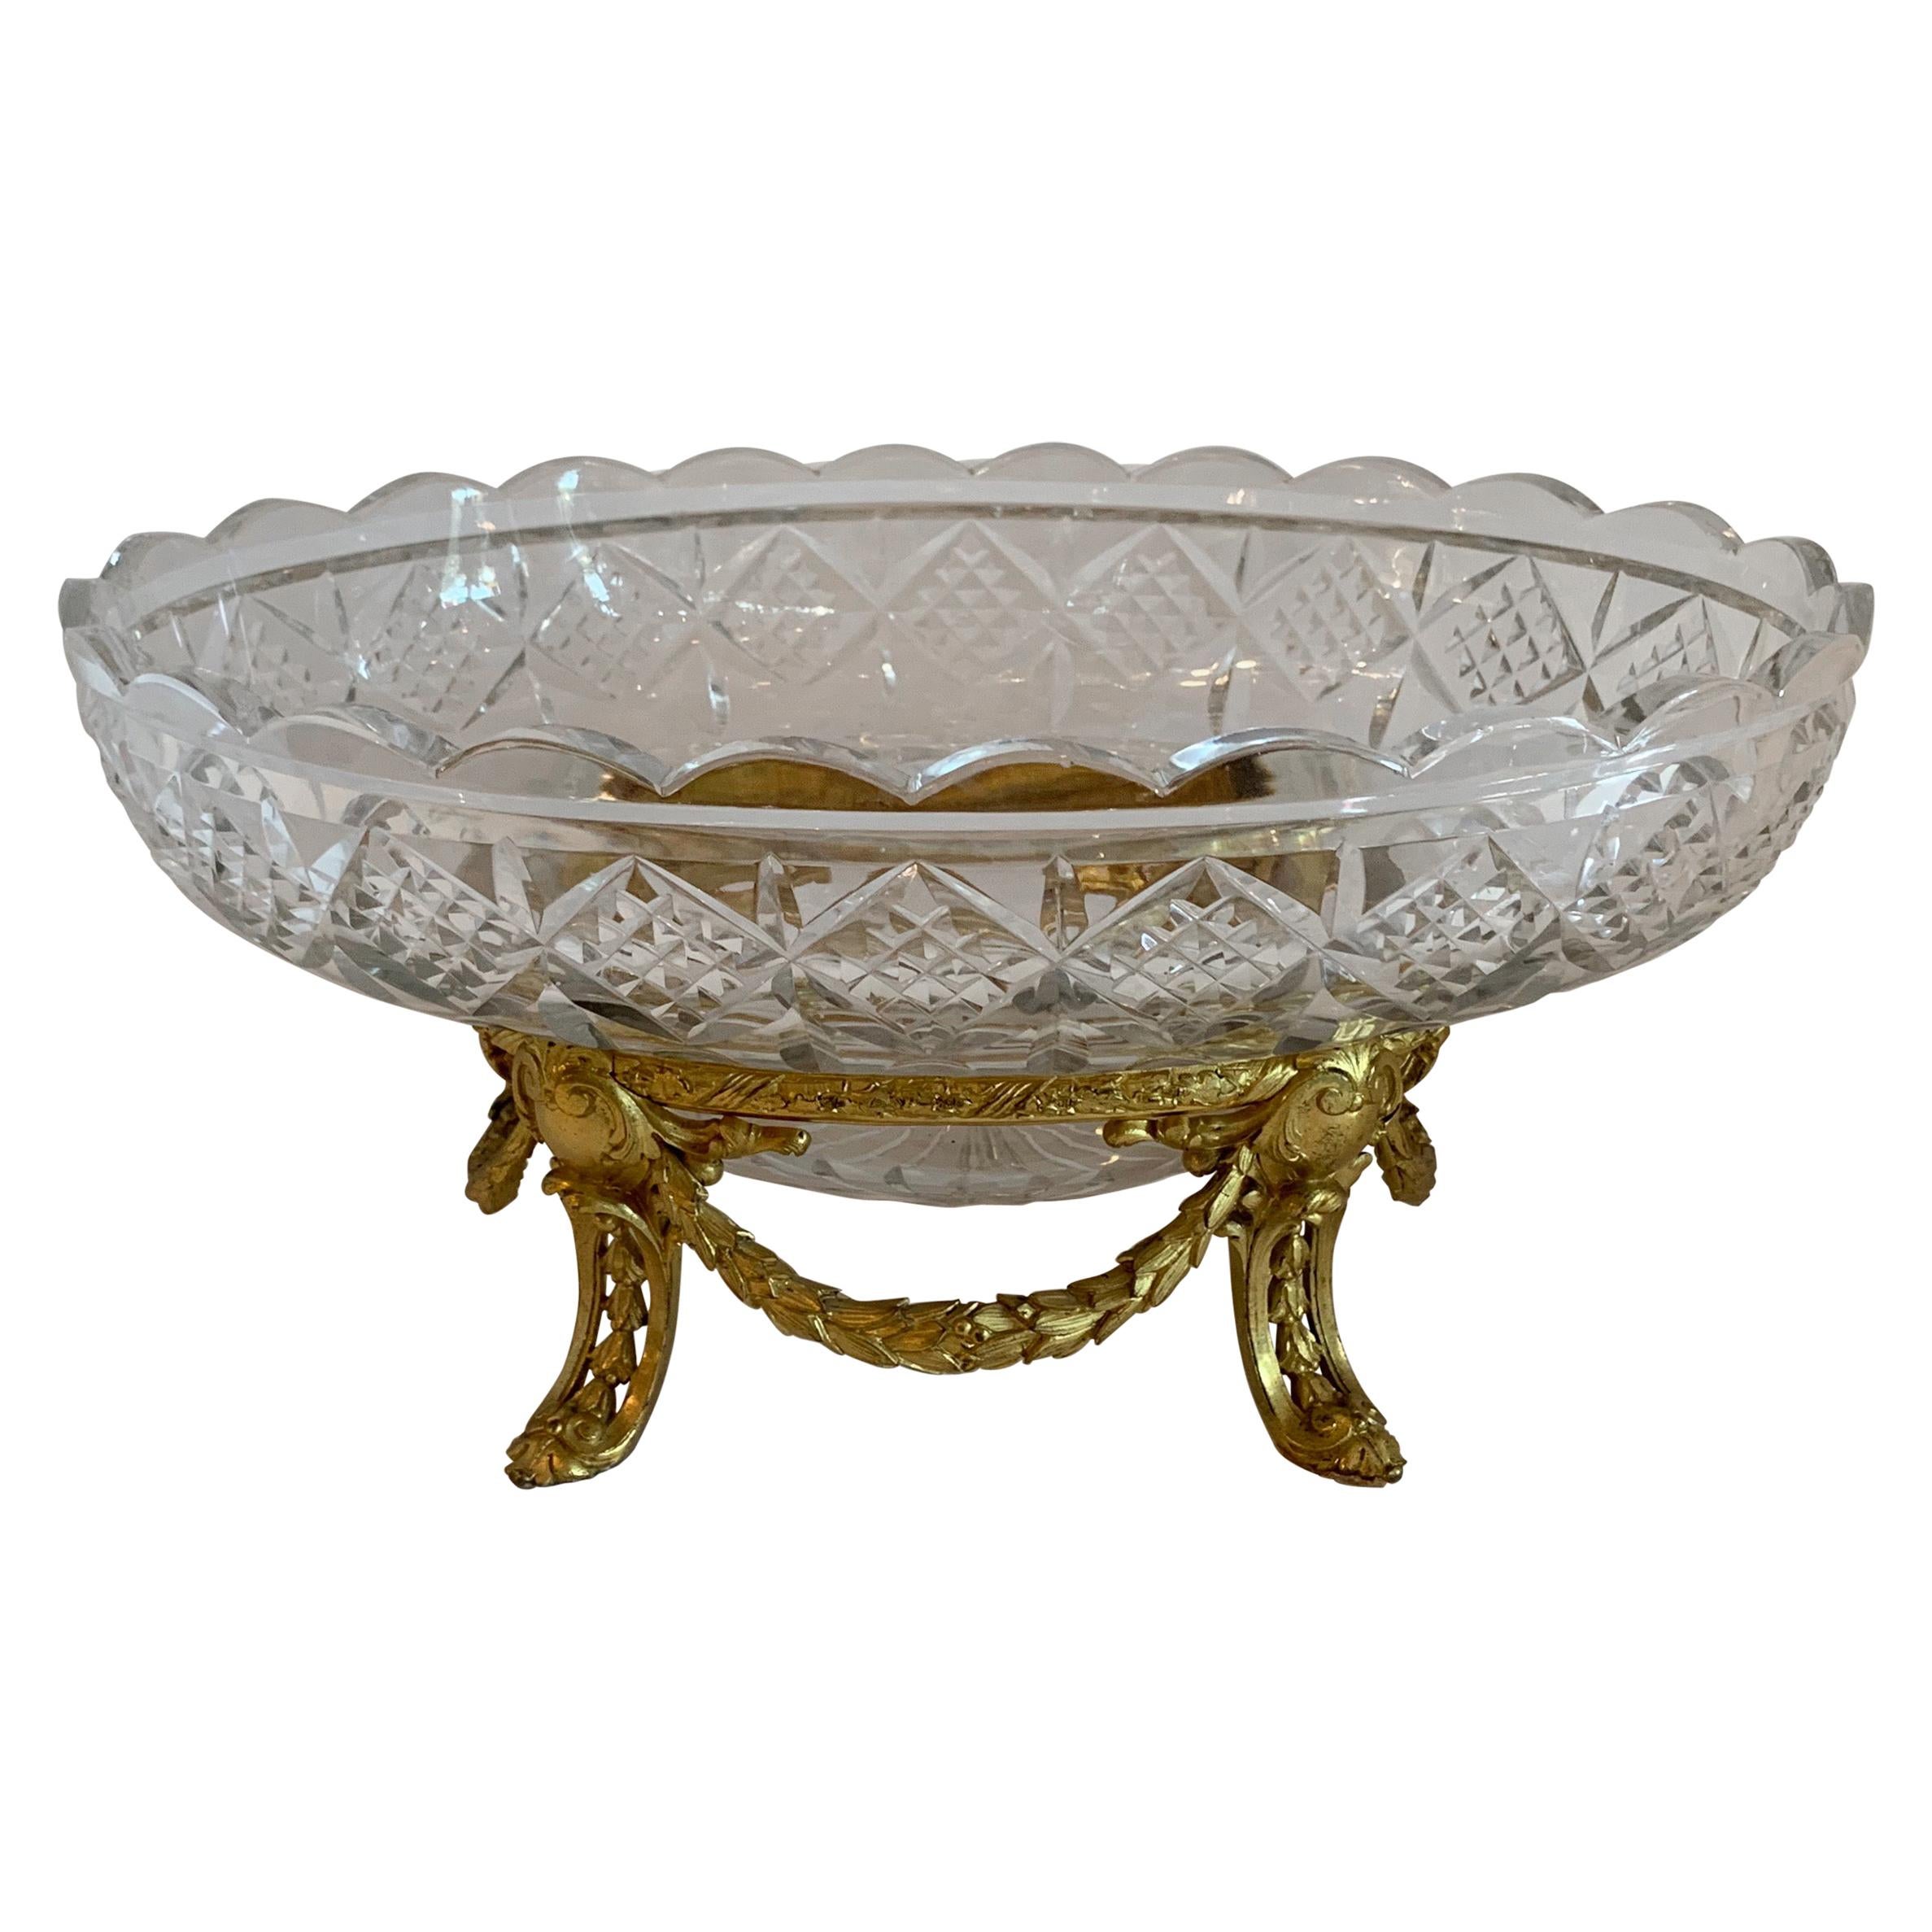 Wonderful French Gilt Doré Bronze Ormolu Swag Cut Crystal Oval Bowl Centerpiece 